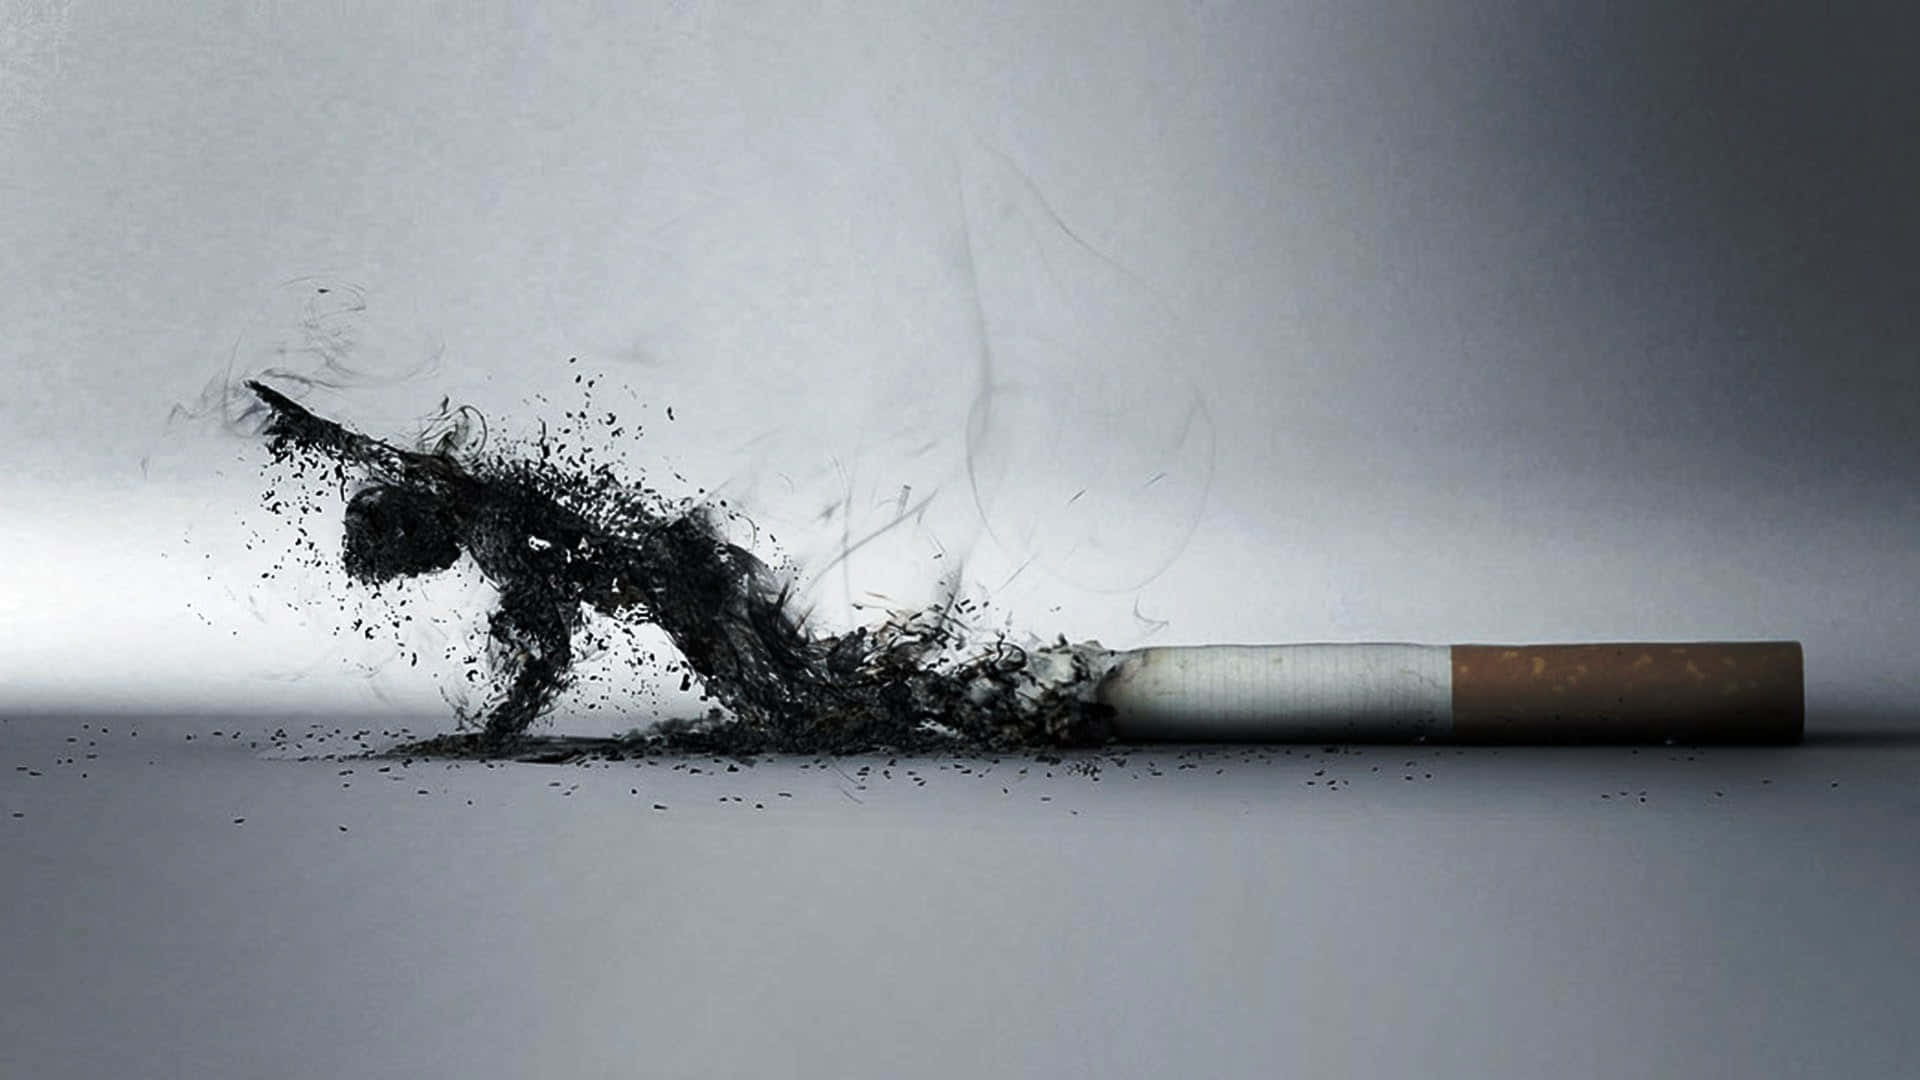 Cigarette: The Demon of Society